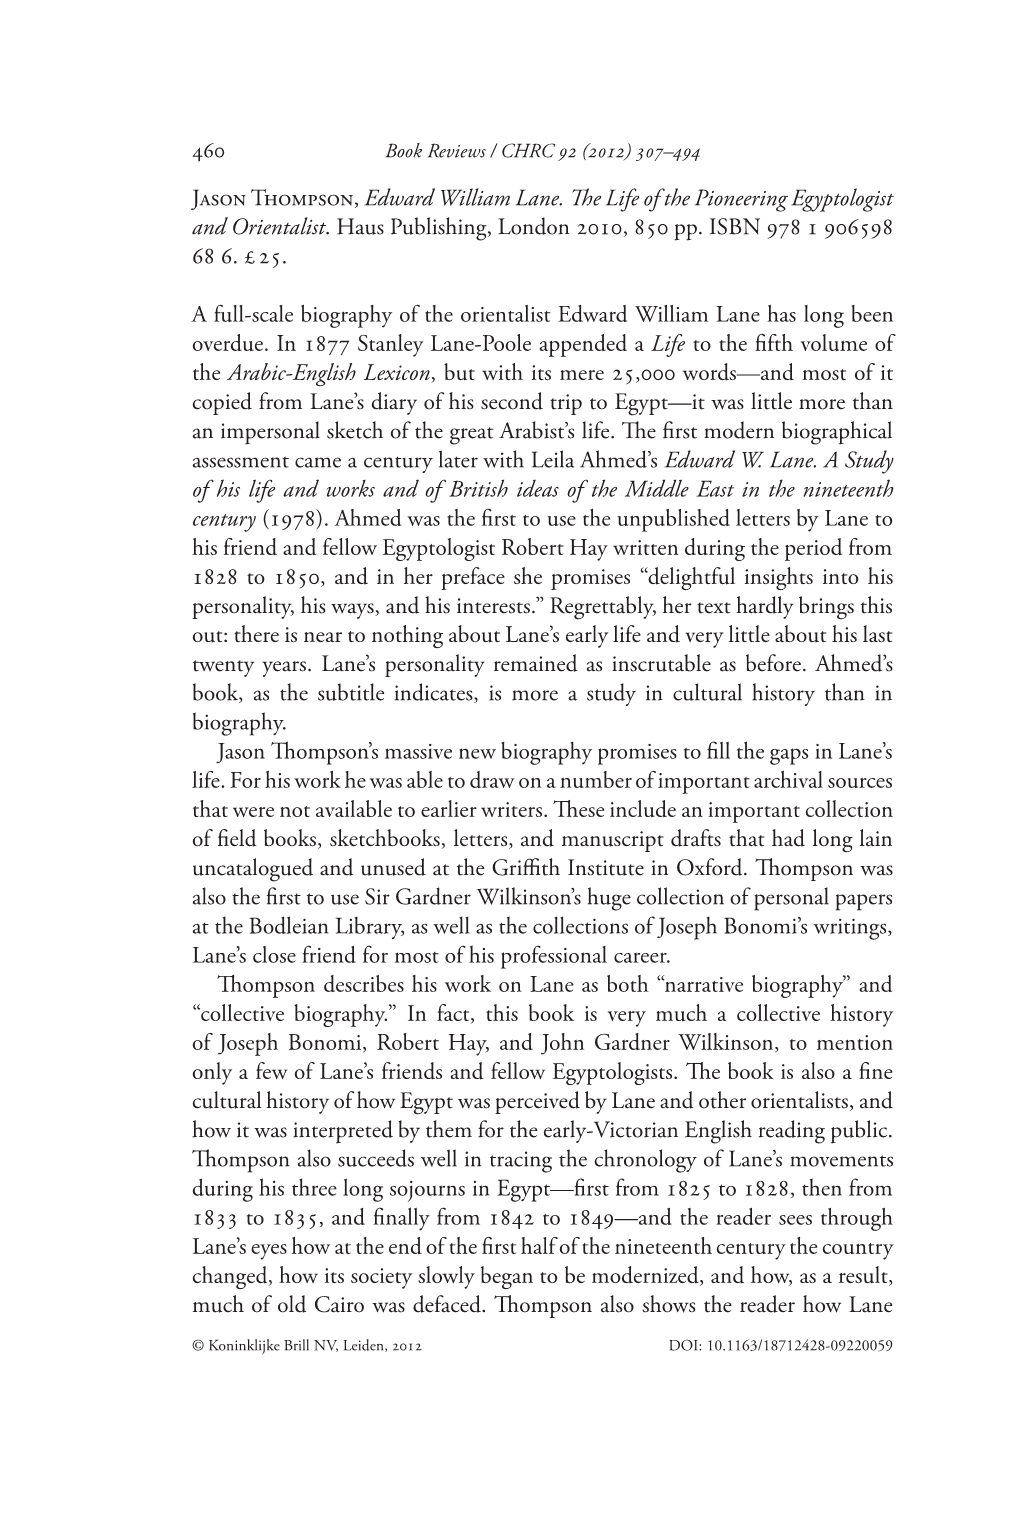 Jason Thompson, Edward William Lane. the Life of the Pioneering Egyptologist and Orientalist